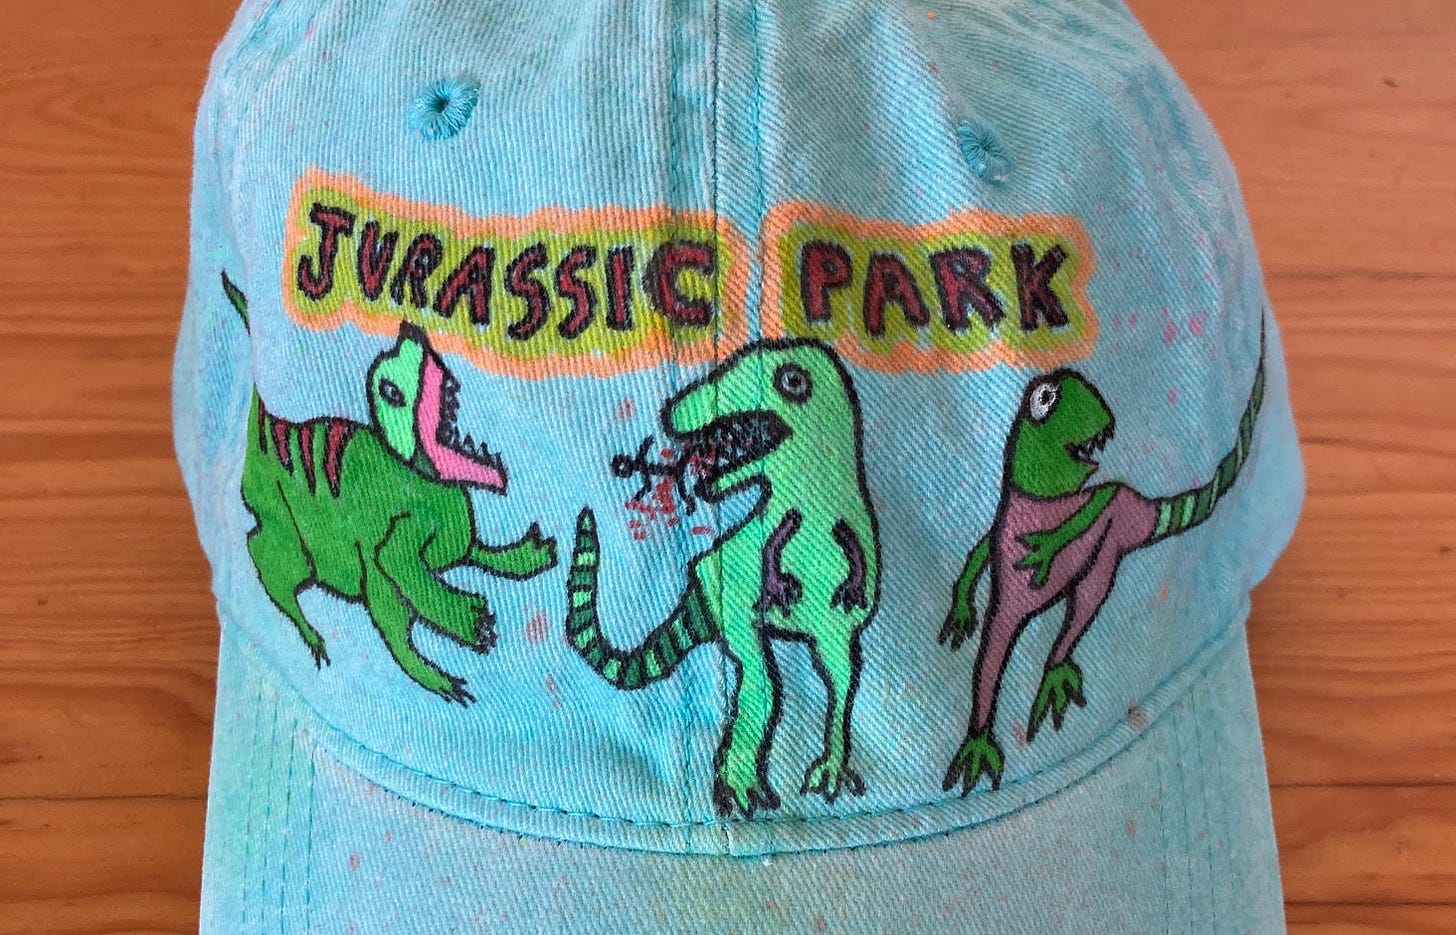 Hand drawn Jurassic Park cap for Dec 22